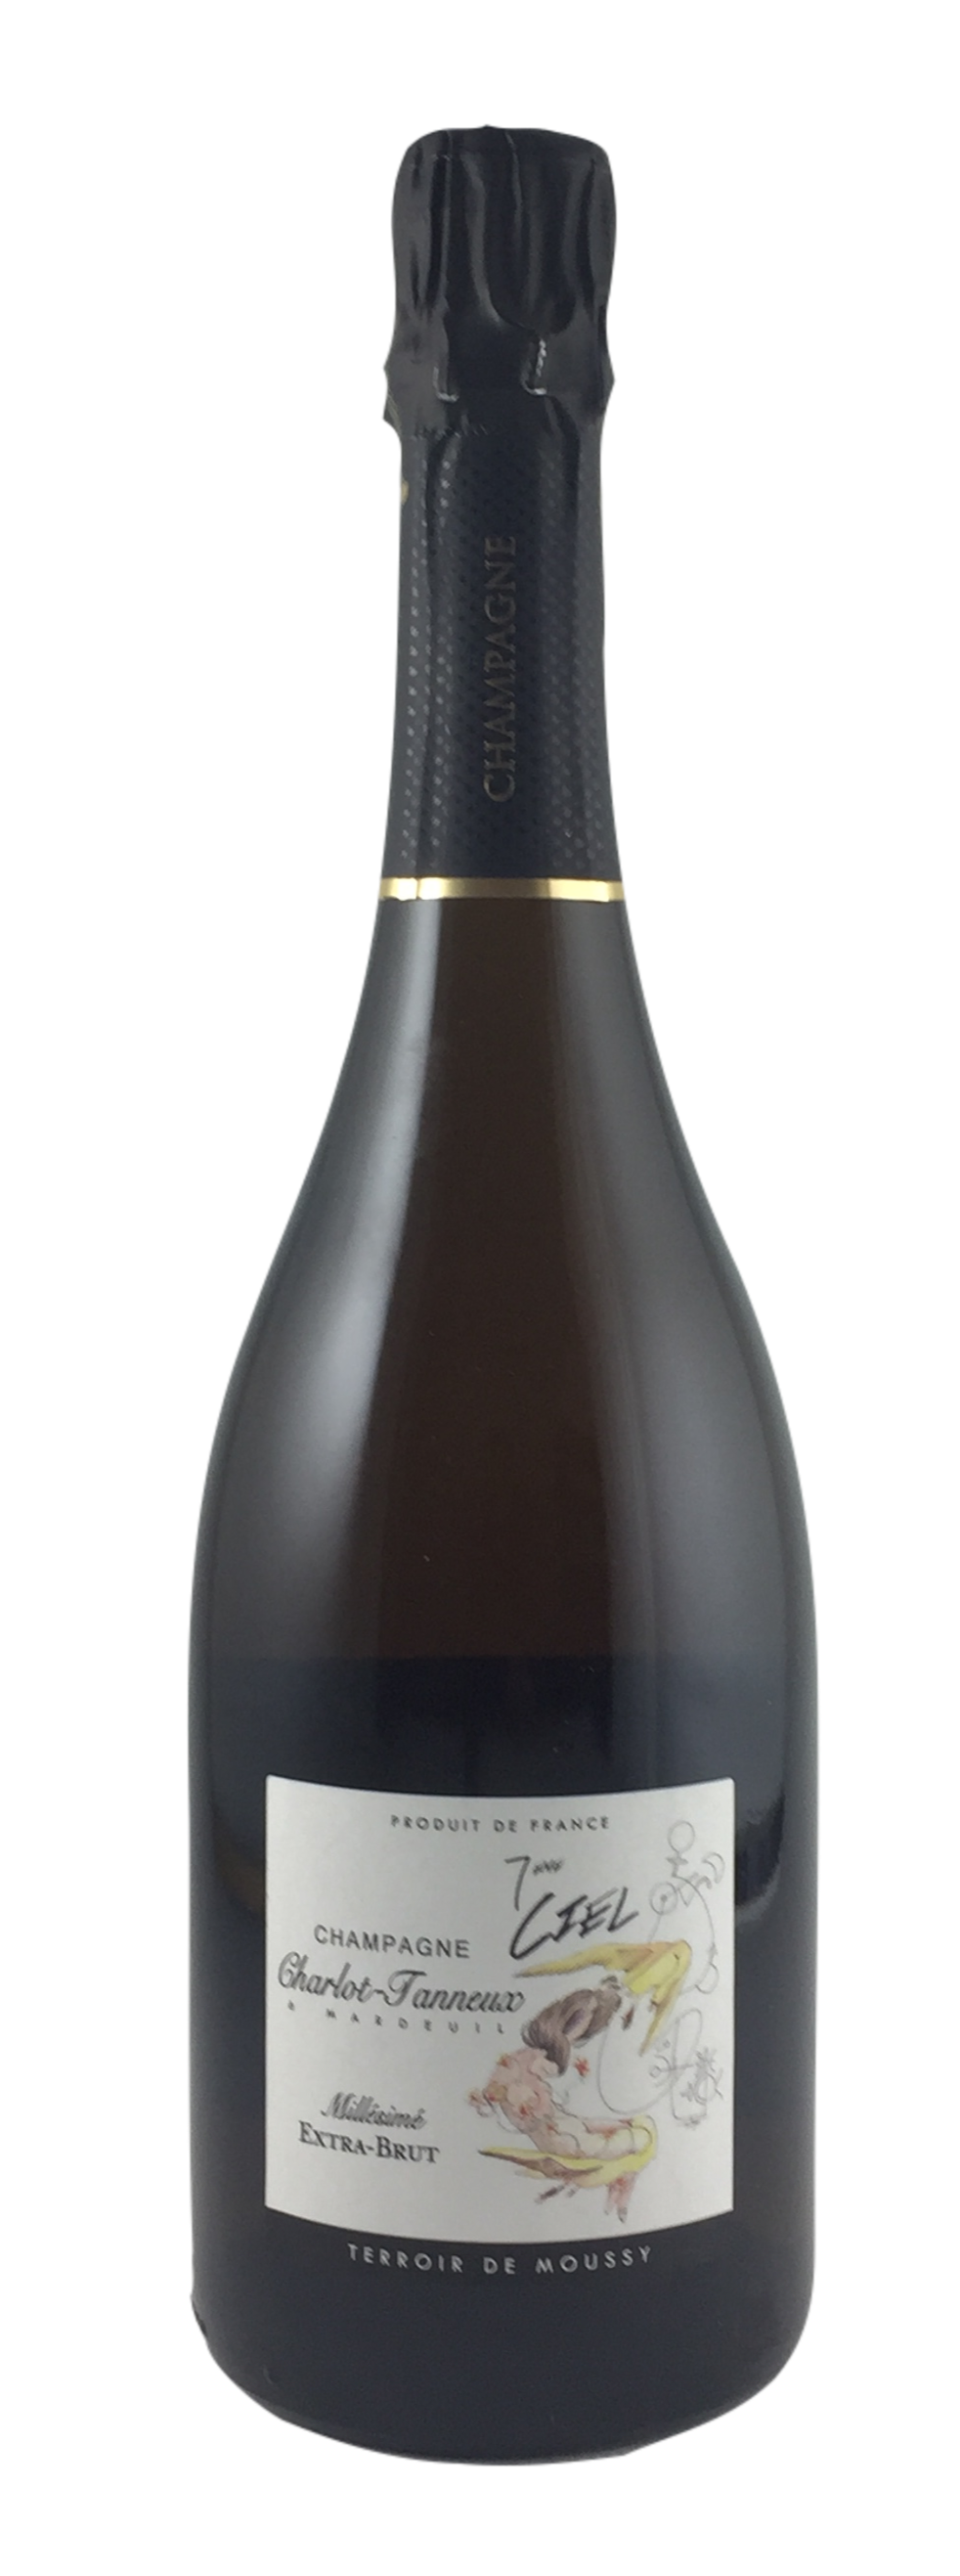 Champagne Charlot Tanneux - 7 ieme Ciel 2015 extra brut